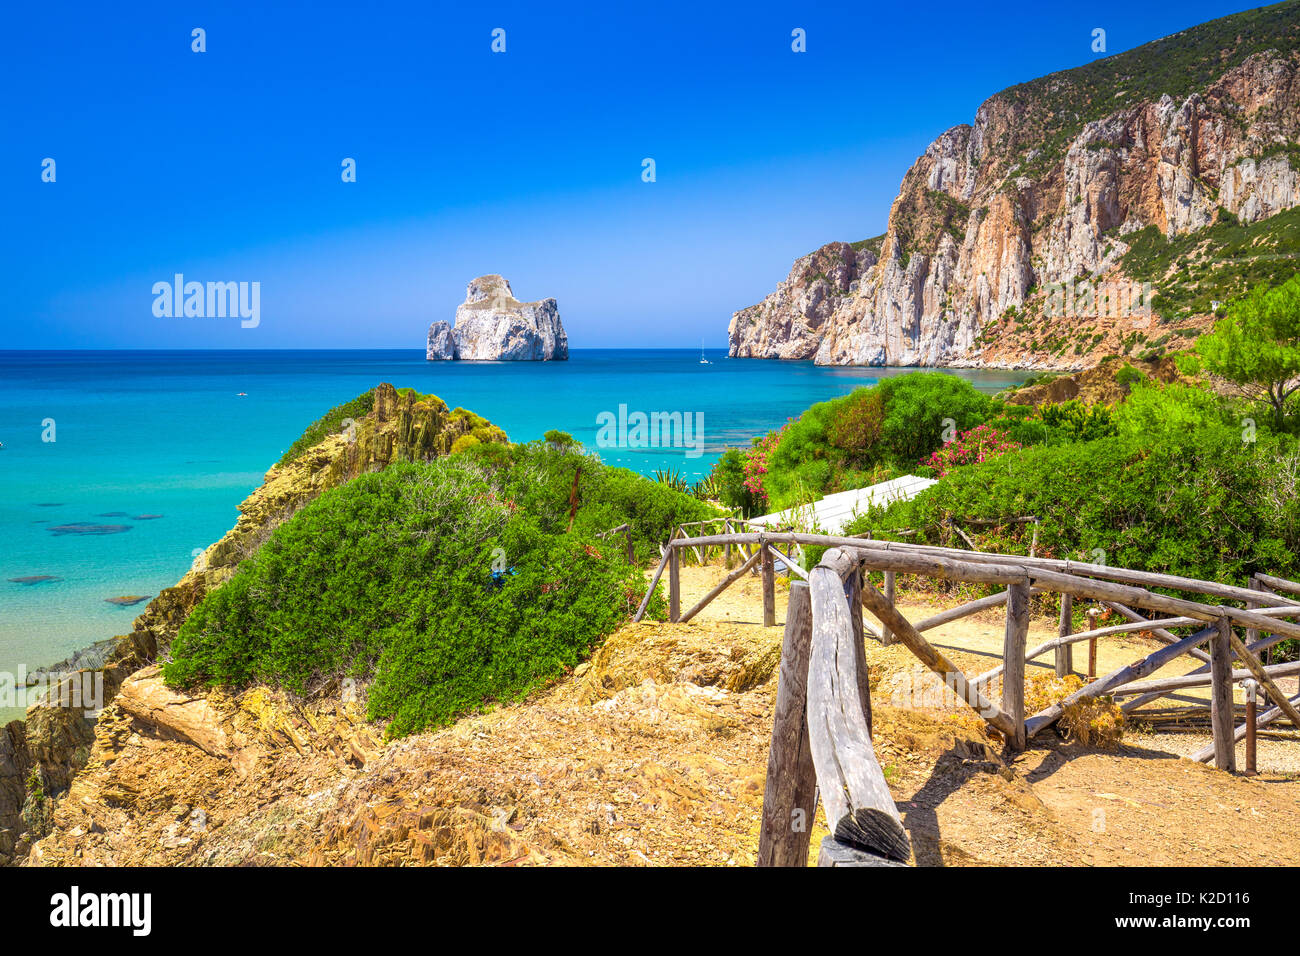 Spaggia di Masua beach and Pan di Zucchero, Costa Verde, Sardinia, Italy. Stock Photo